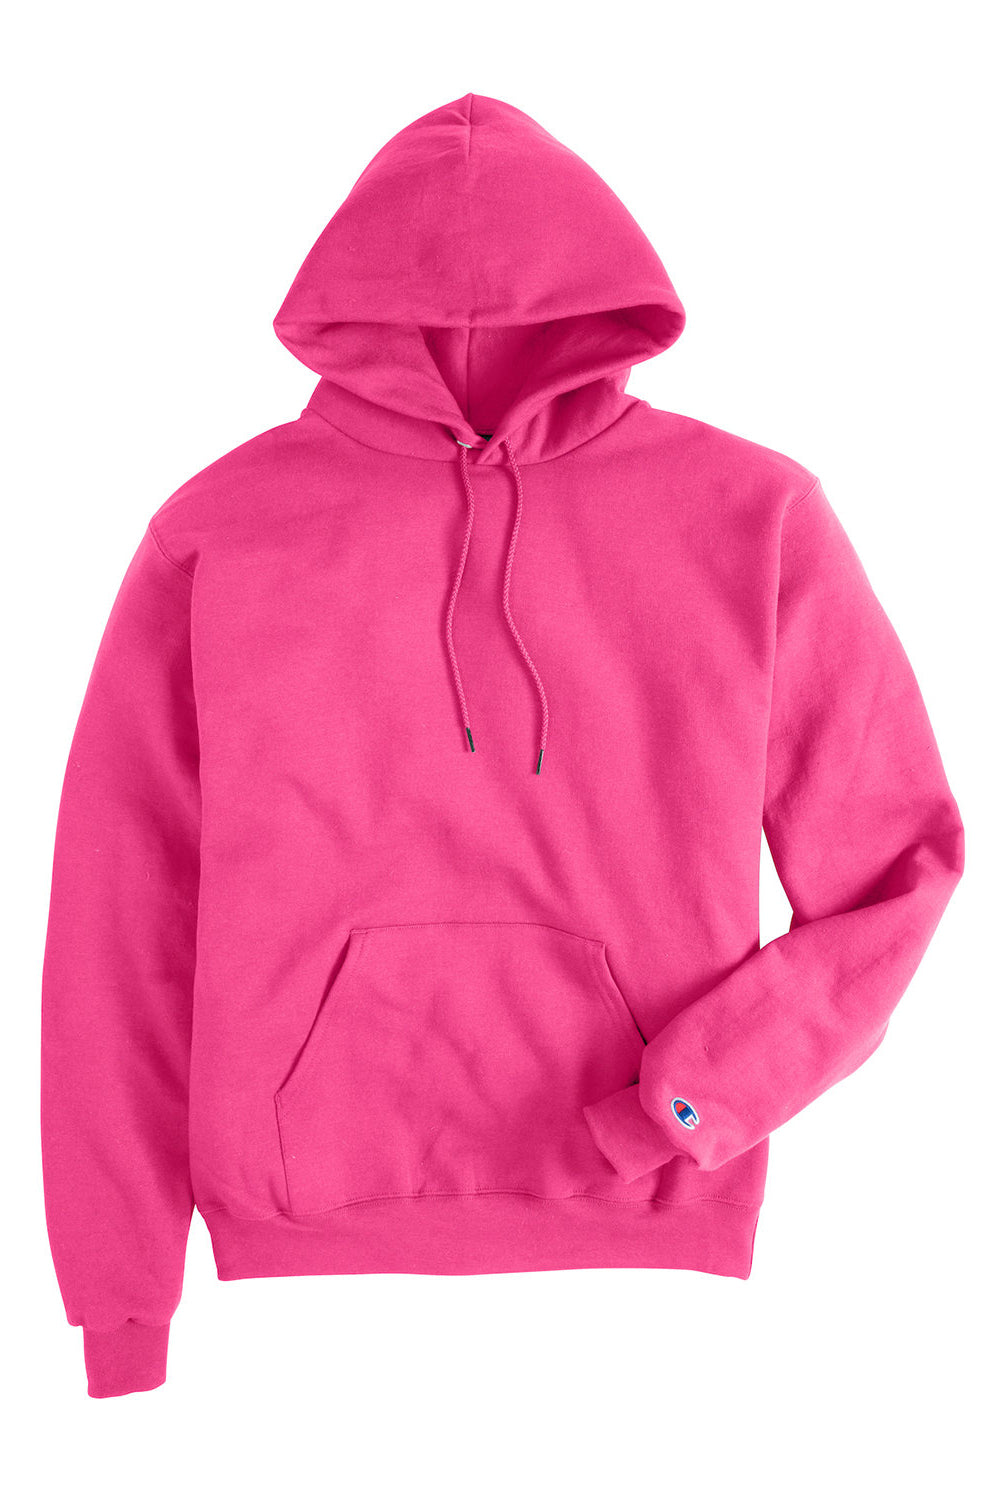 Champion S700 Mens Double Dry Eco Moisture Wicking Fleece Hooded Sweatshirt Hoodie Wow Pink Flat Front